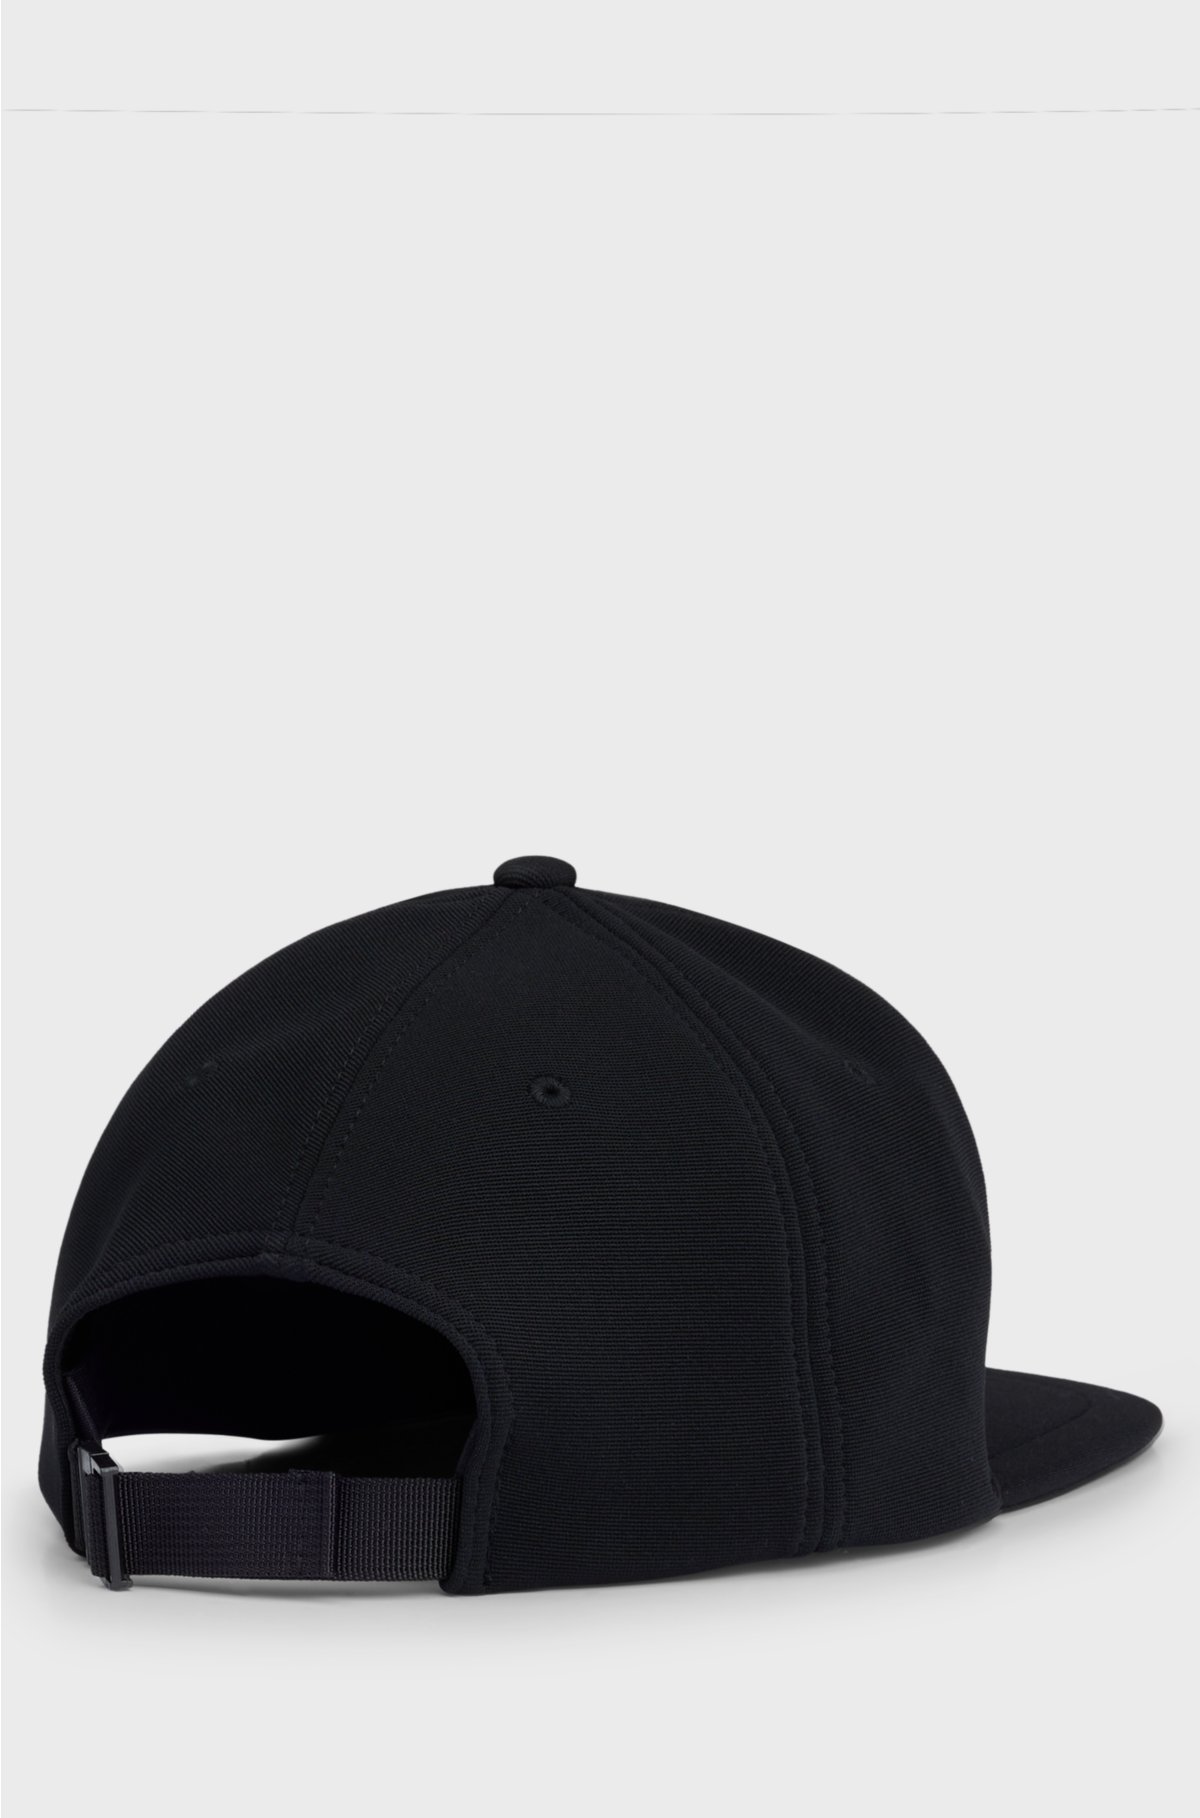 Stretch-jersey cap with decorative reflective logo, Black